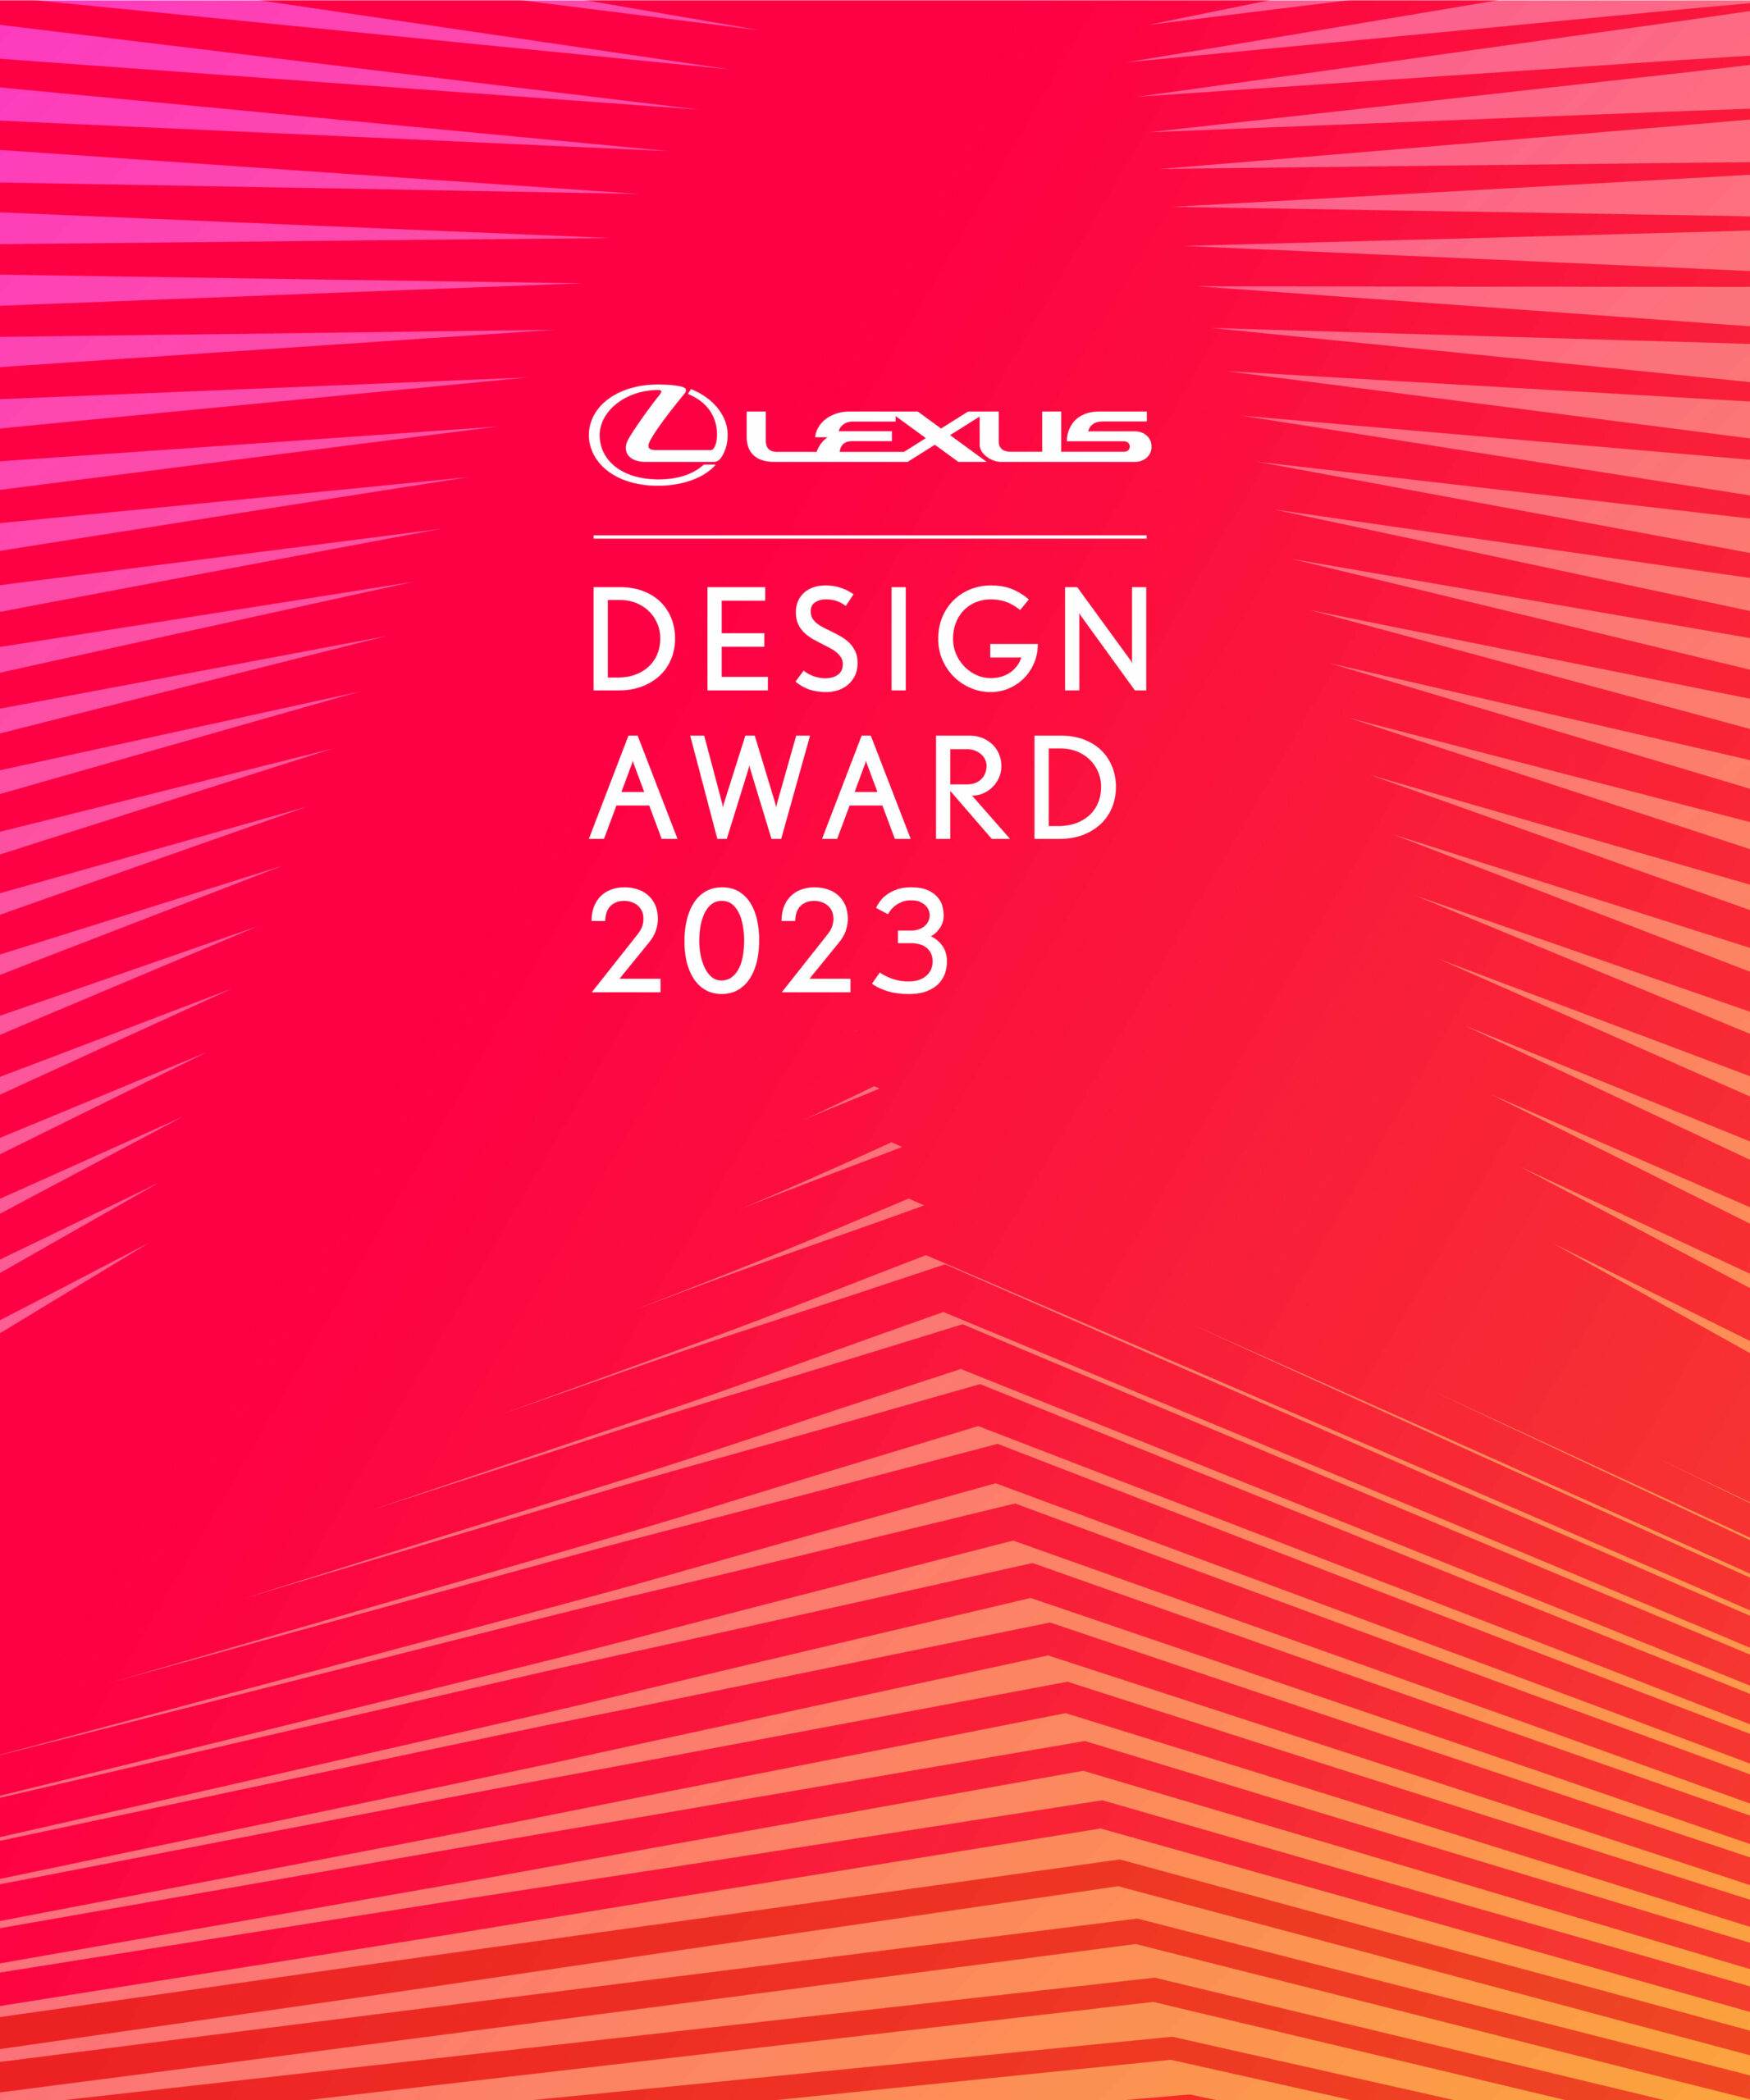 past finalists reveal career-defining journey ahead of LEXUS DESIGN AWARD 2023